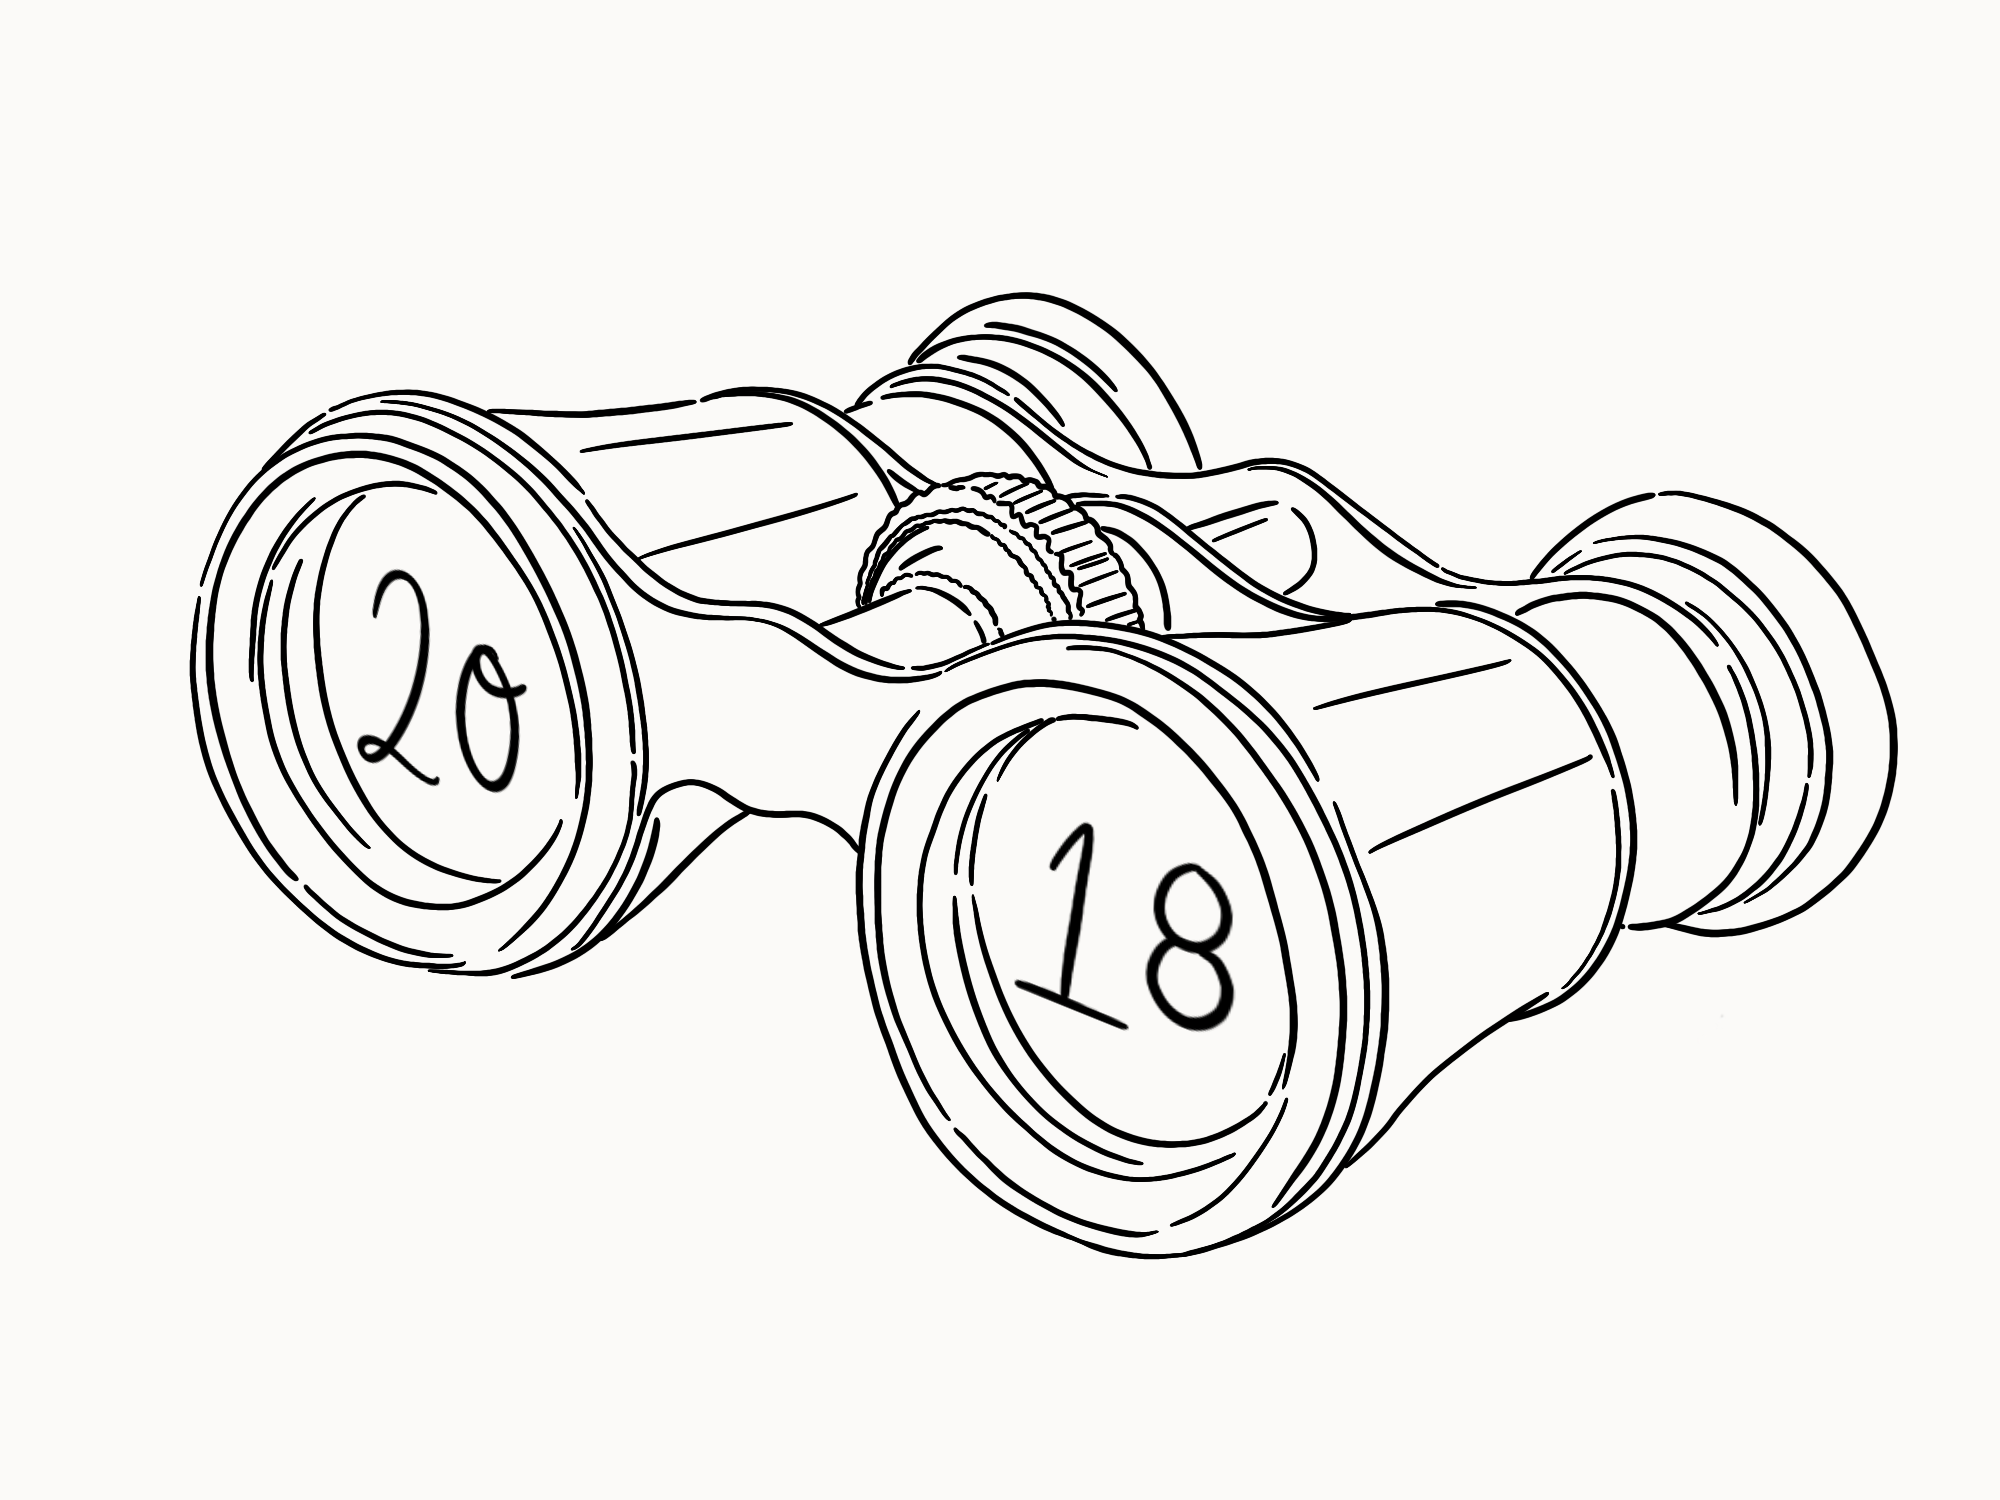 2018 binoculars illustration